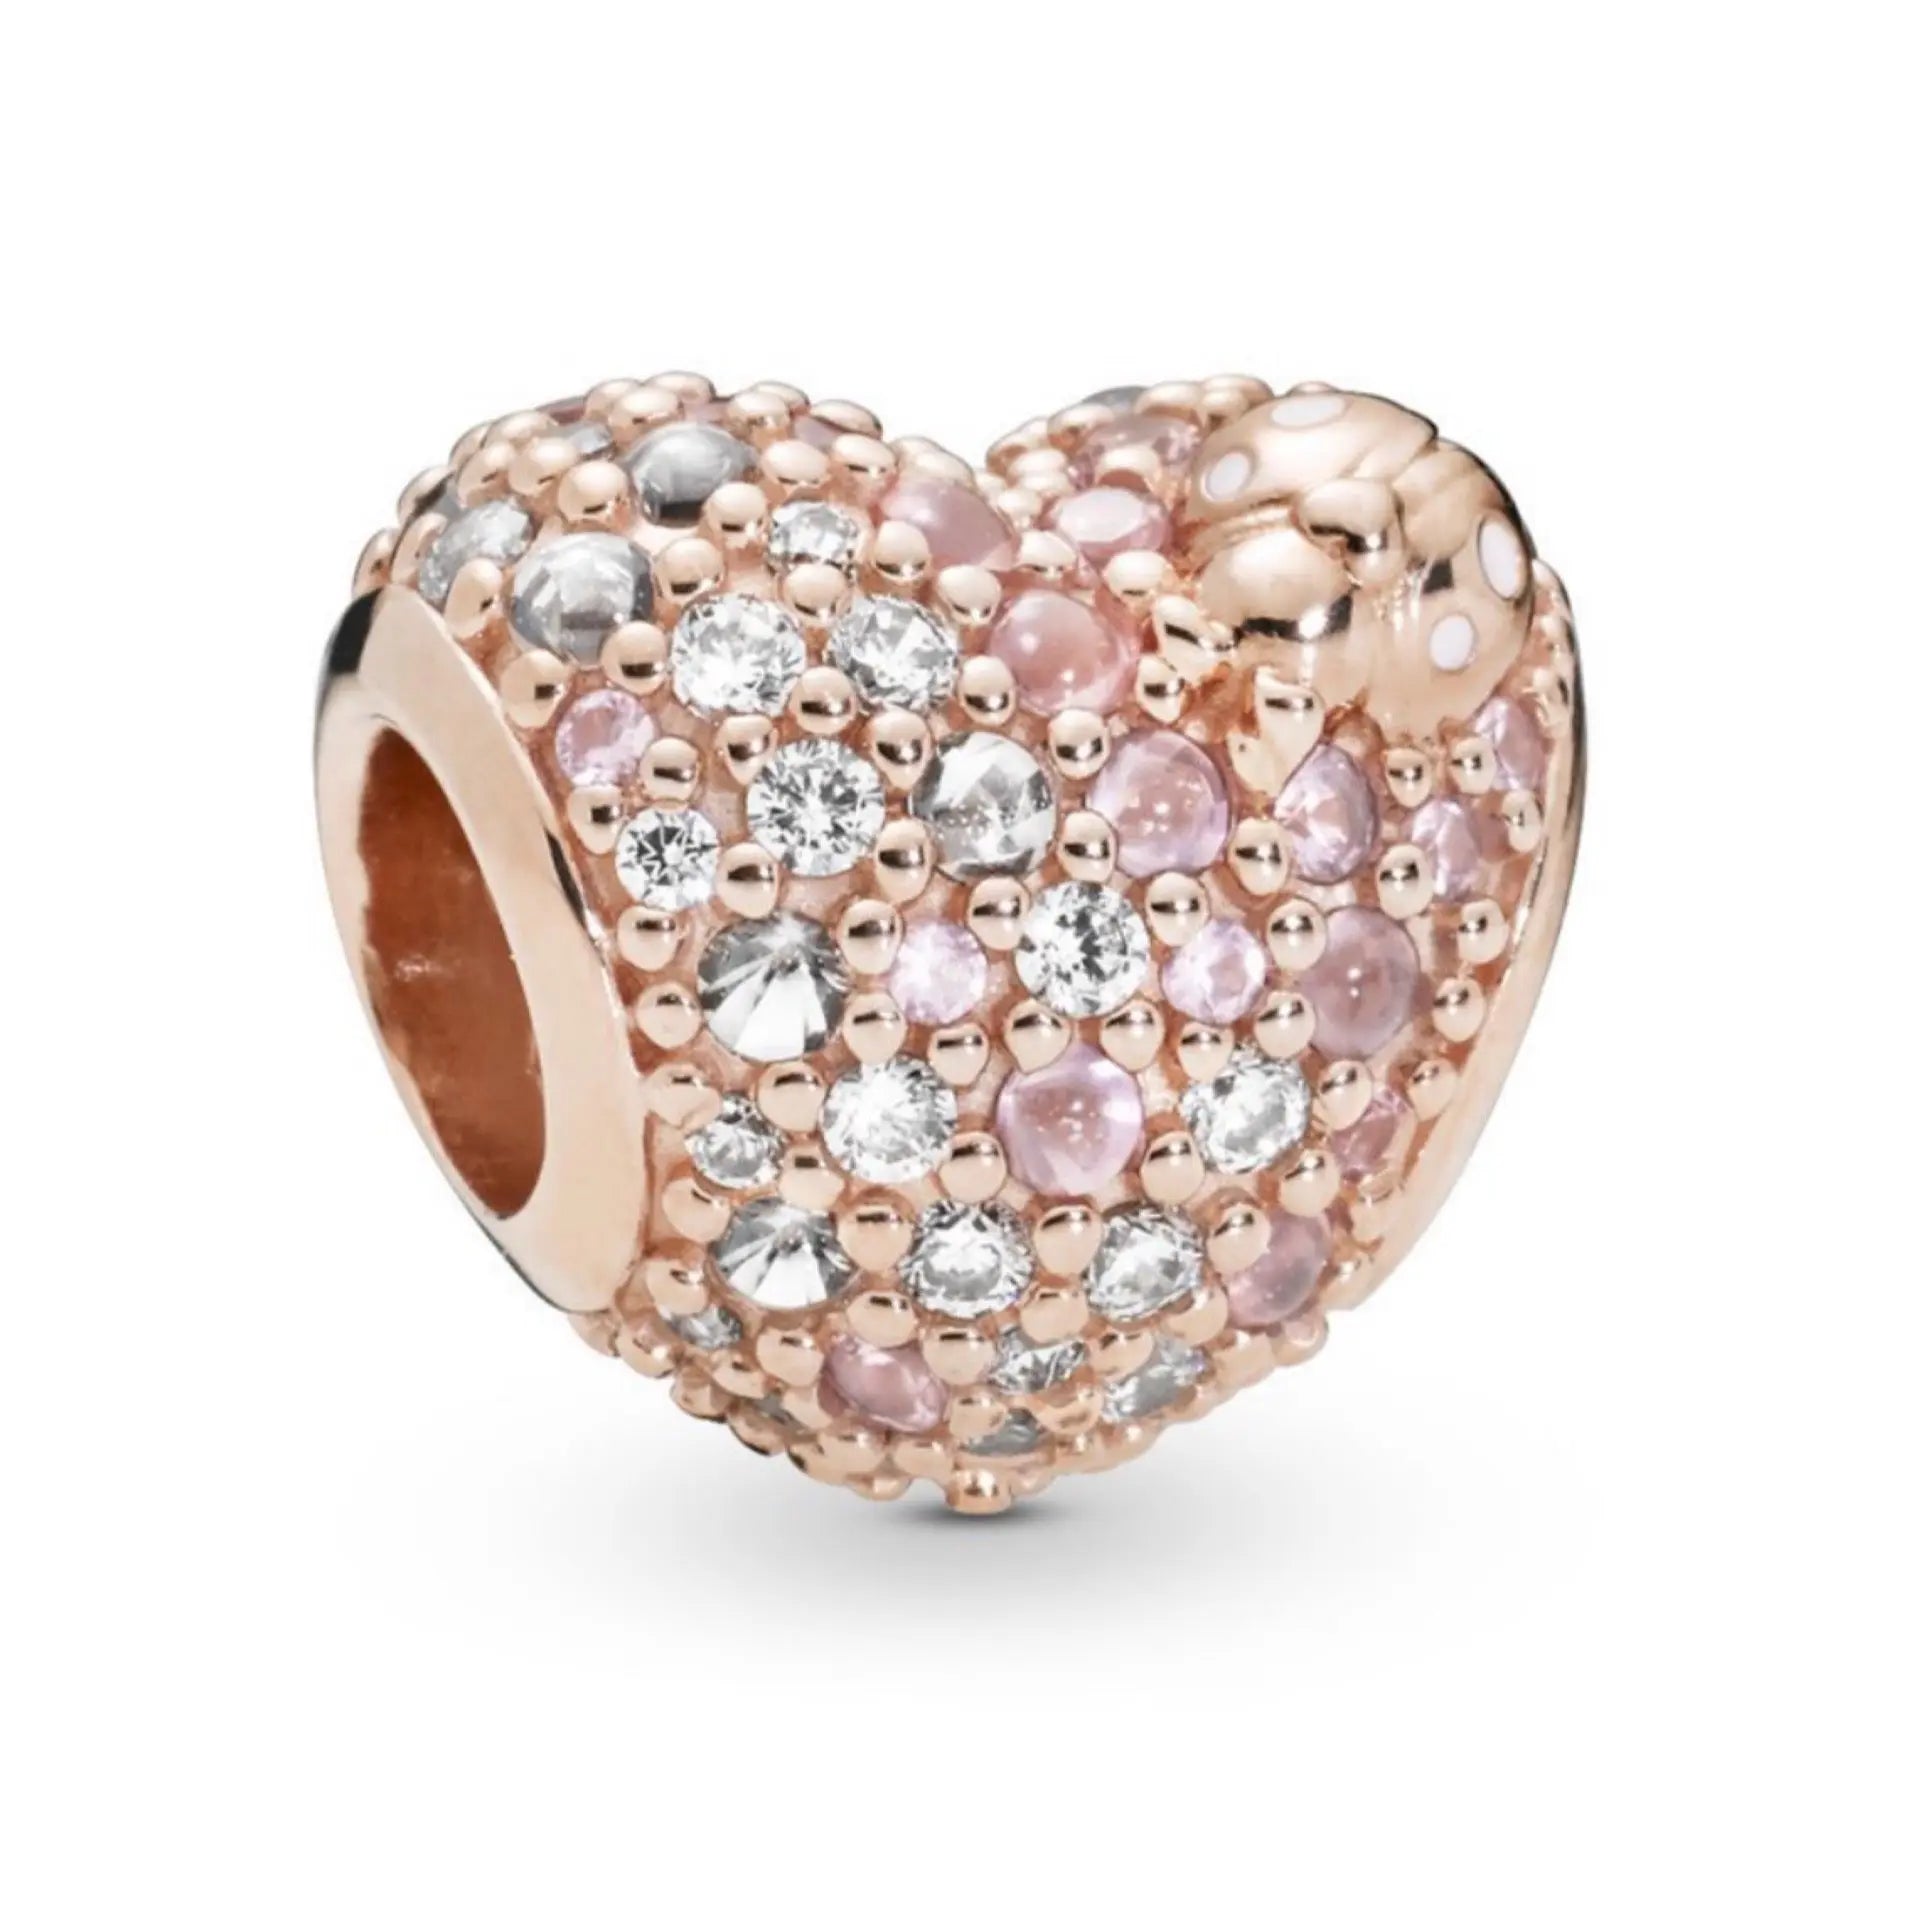 Pandora Gleaming Ladybird Heart Charm - Danson Jewelers Silver Jewelry 